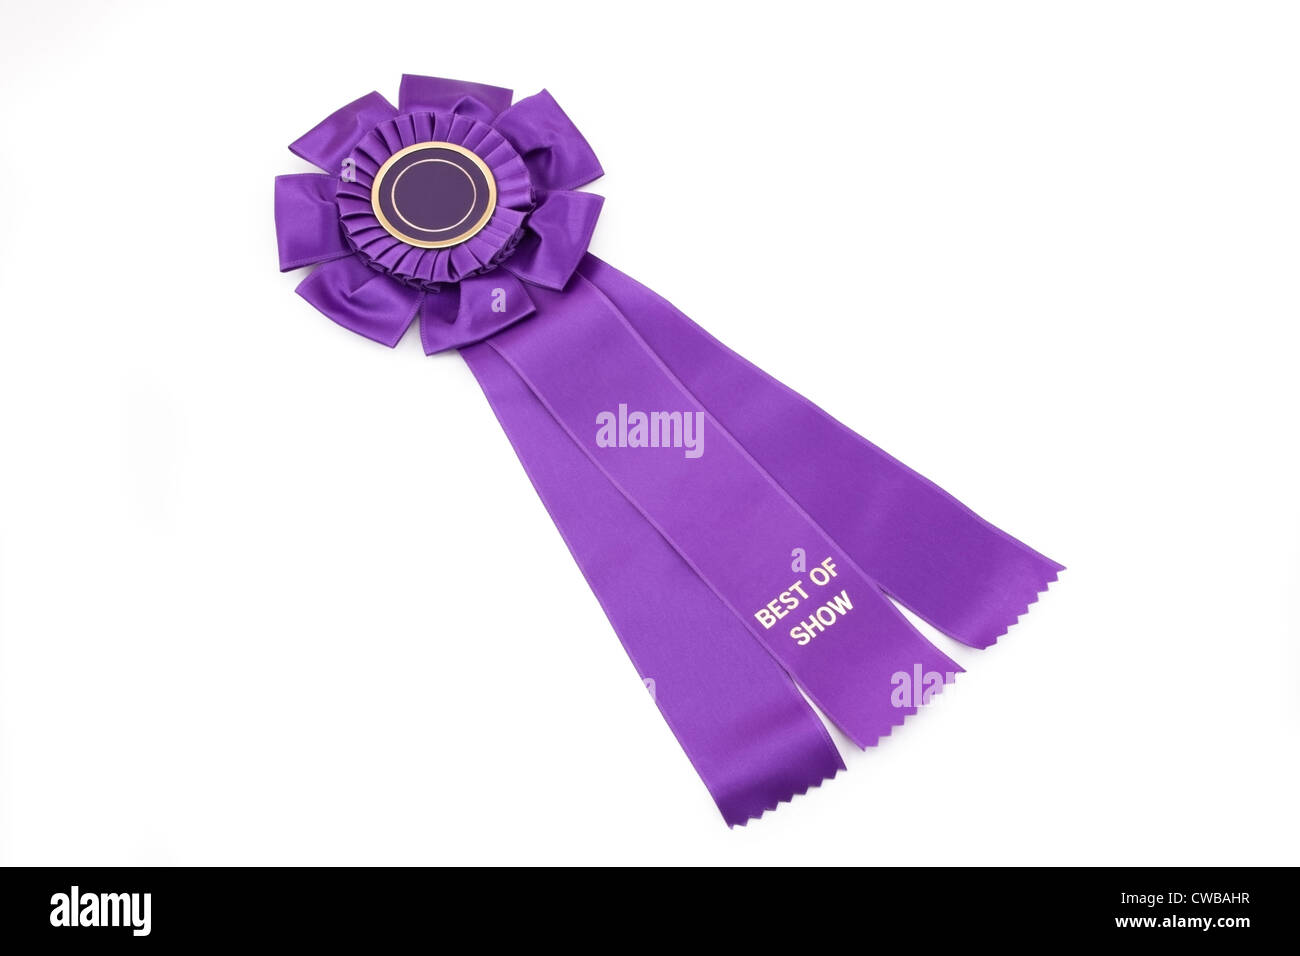 Purple Ribbon Awards